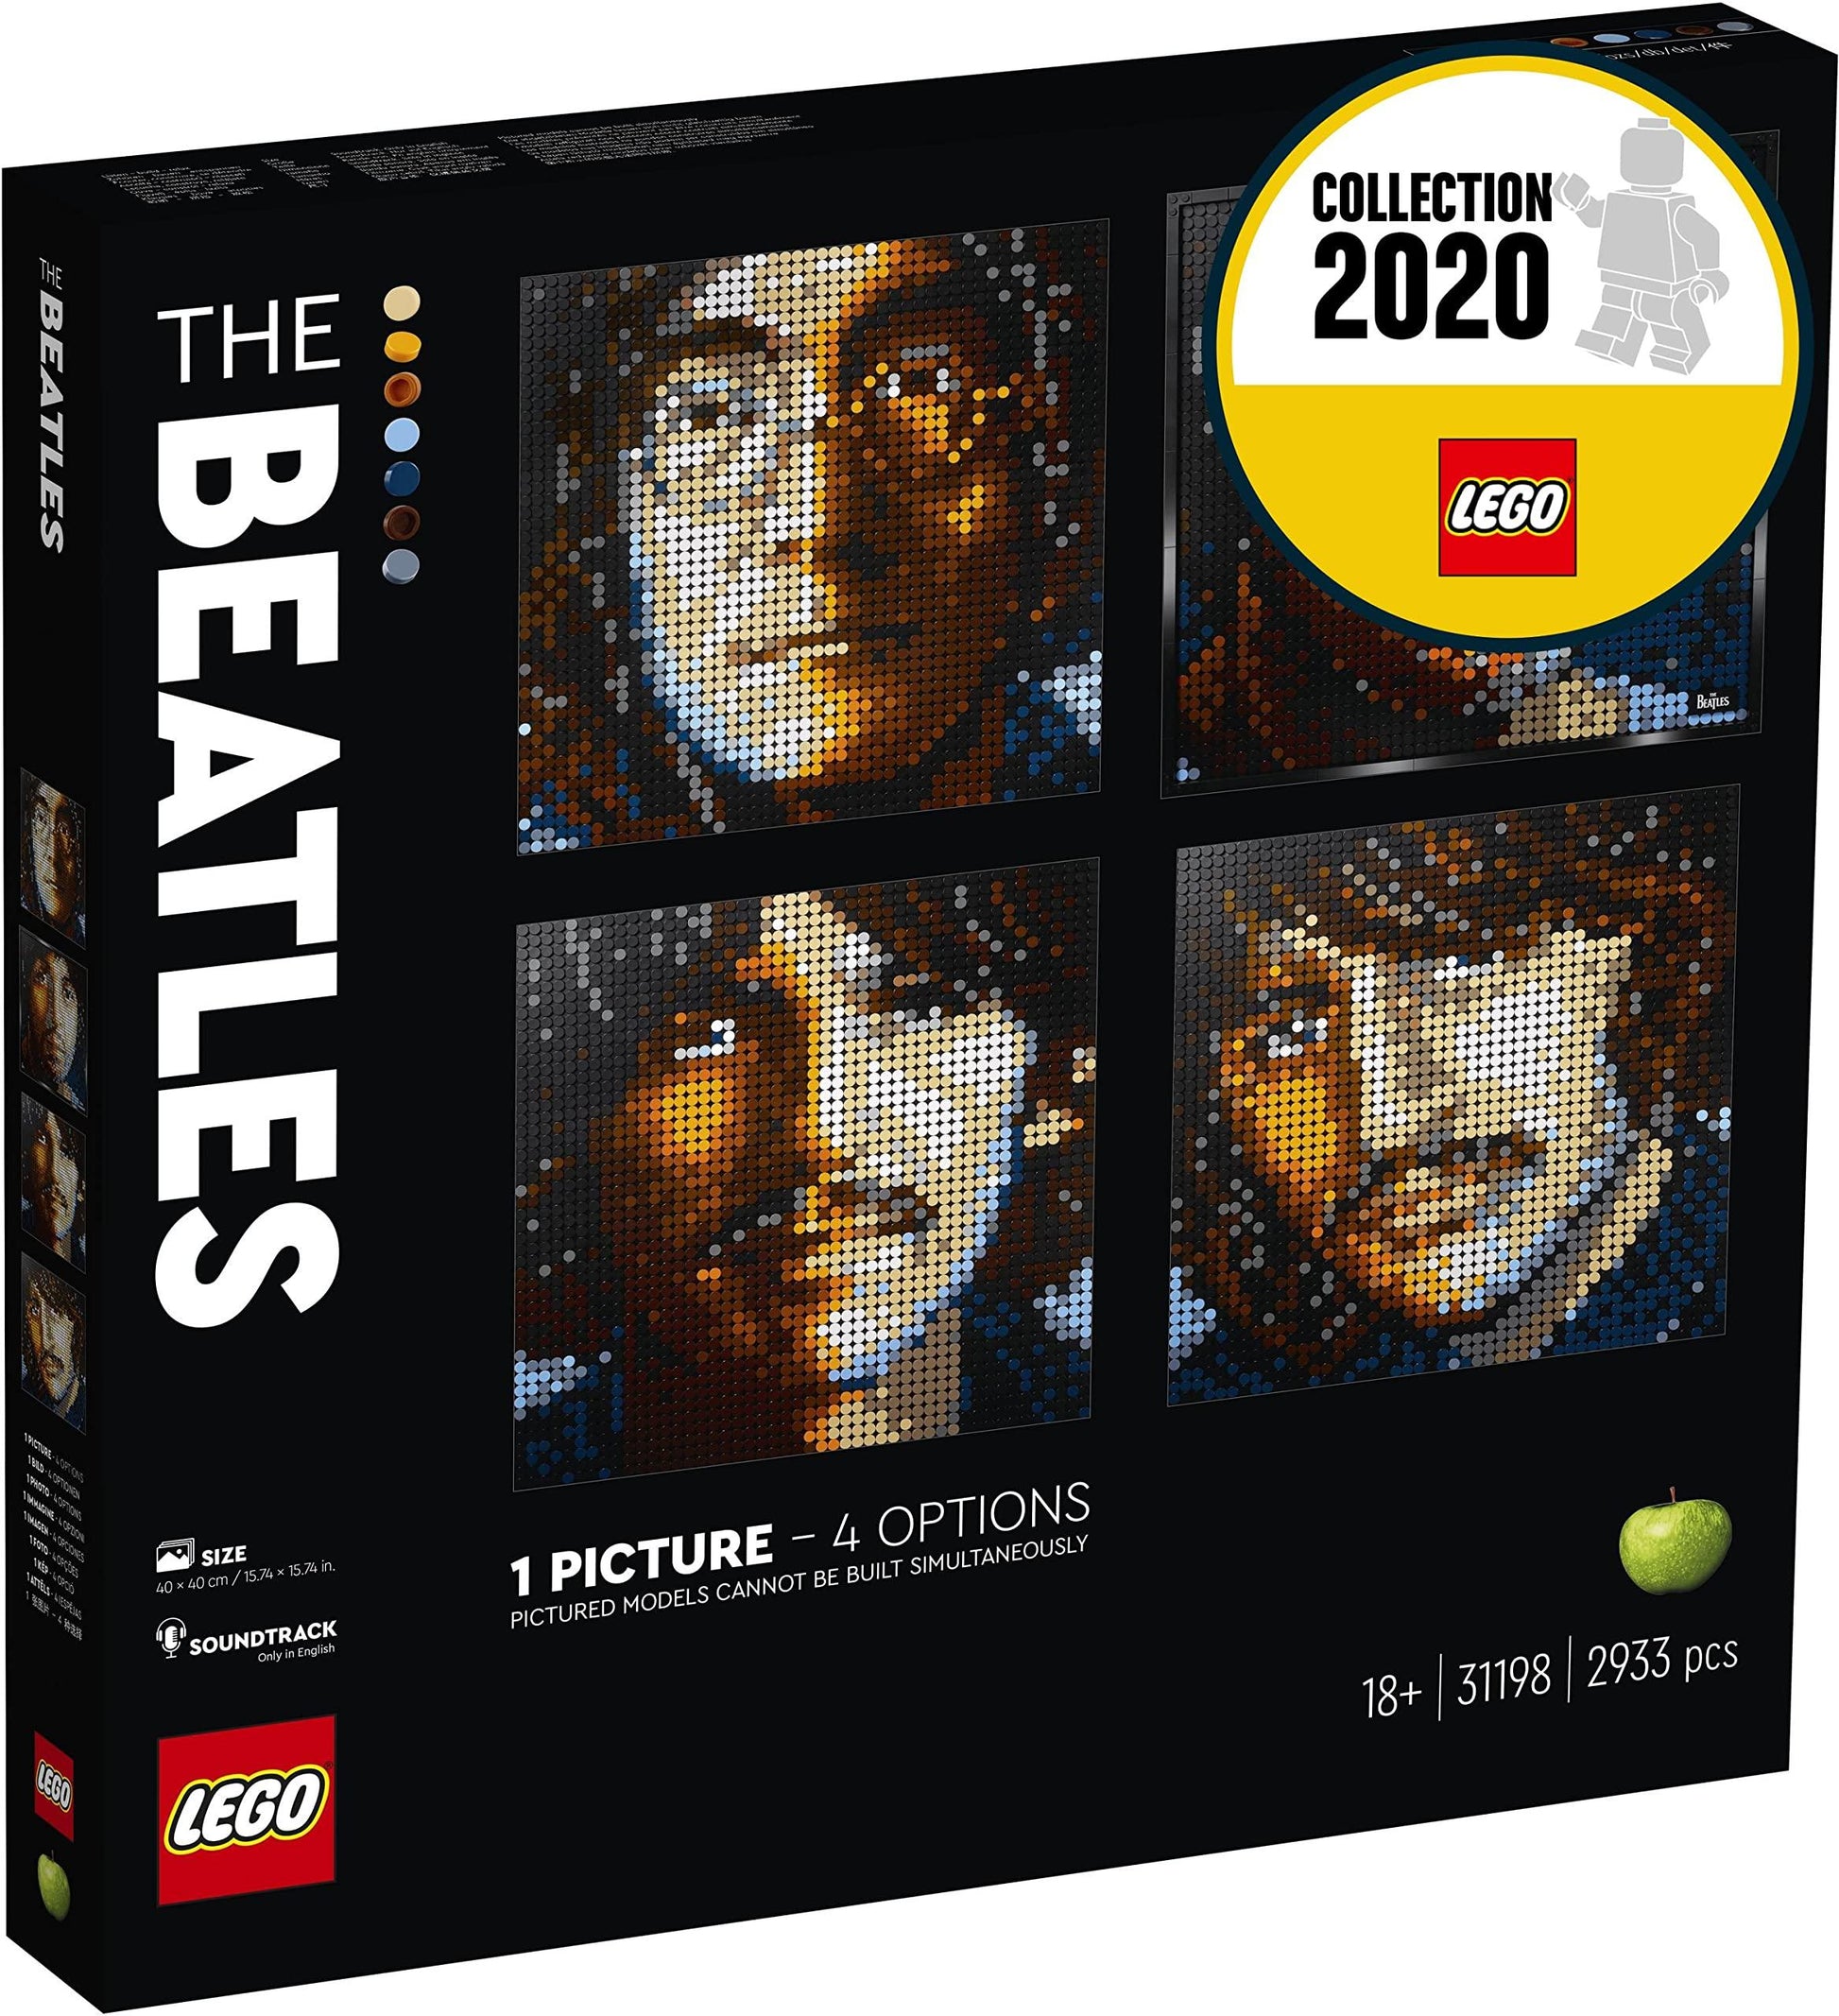 LEGO The Beatles schilderij met LEGO steentjes 31198 Art LEGO ART @ 2TTOYS LEGO €. 119.99